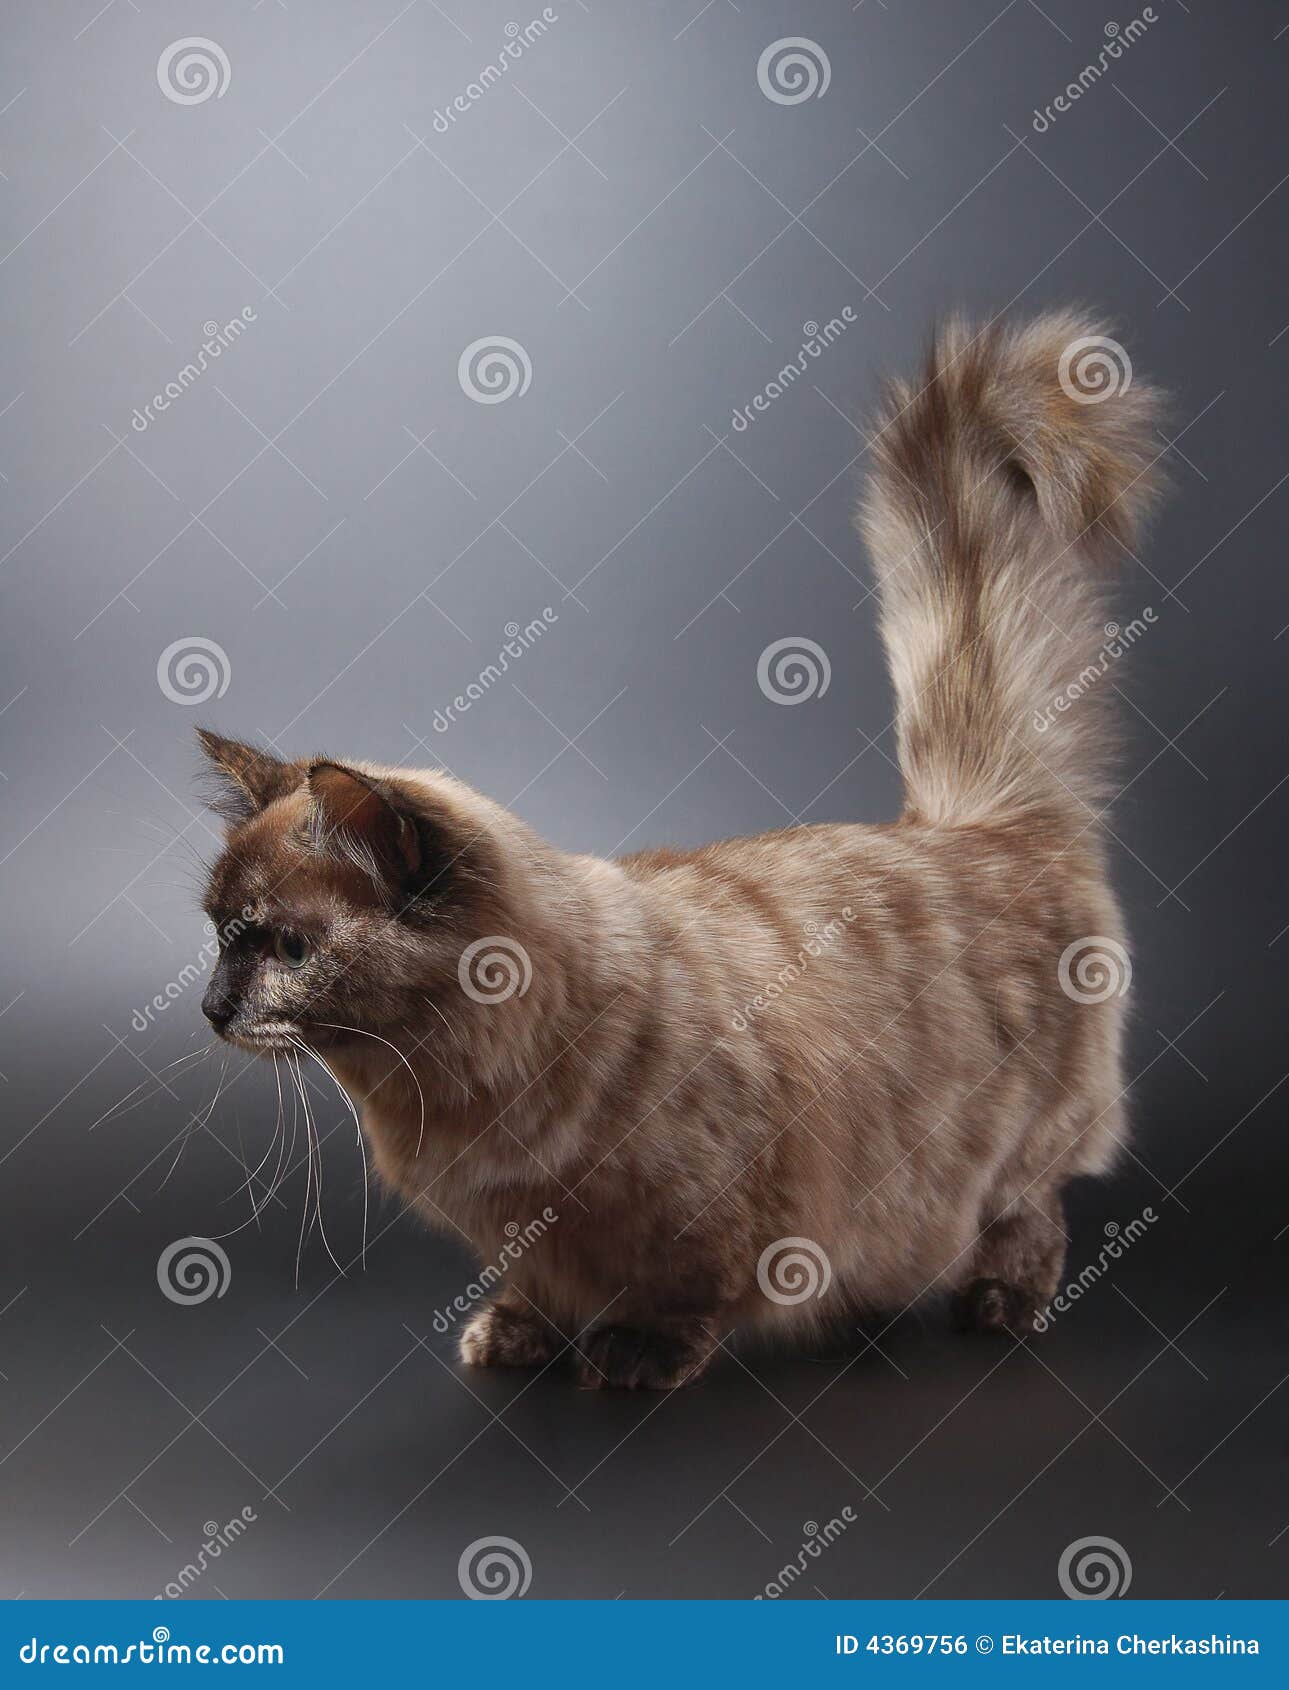 fluffy munchkin cat